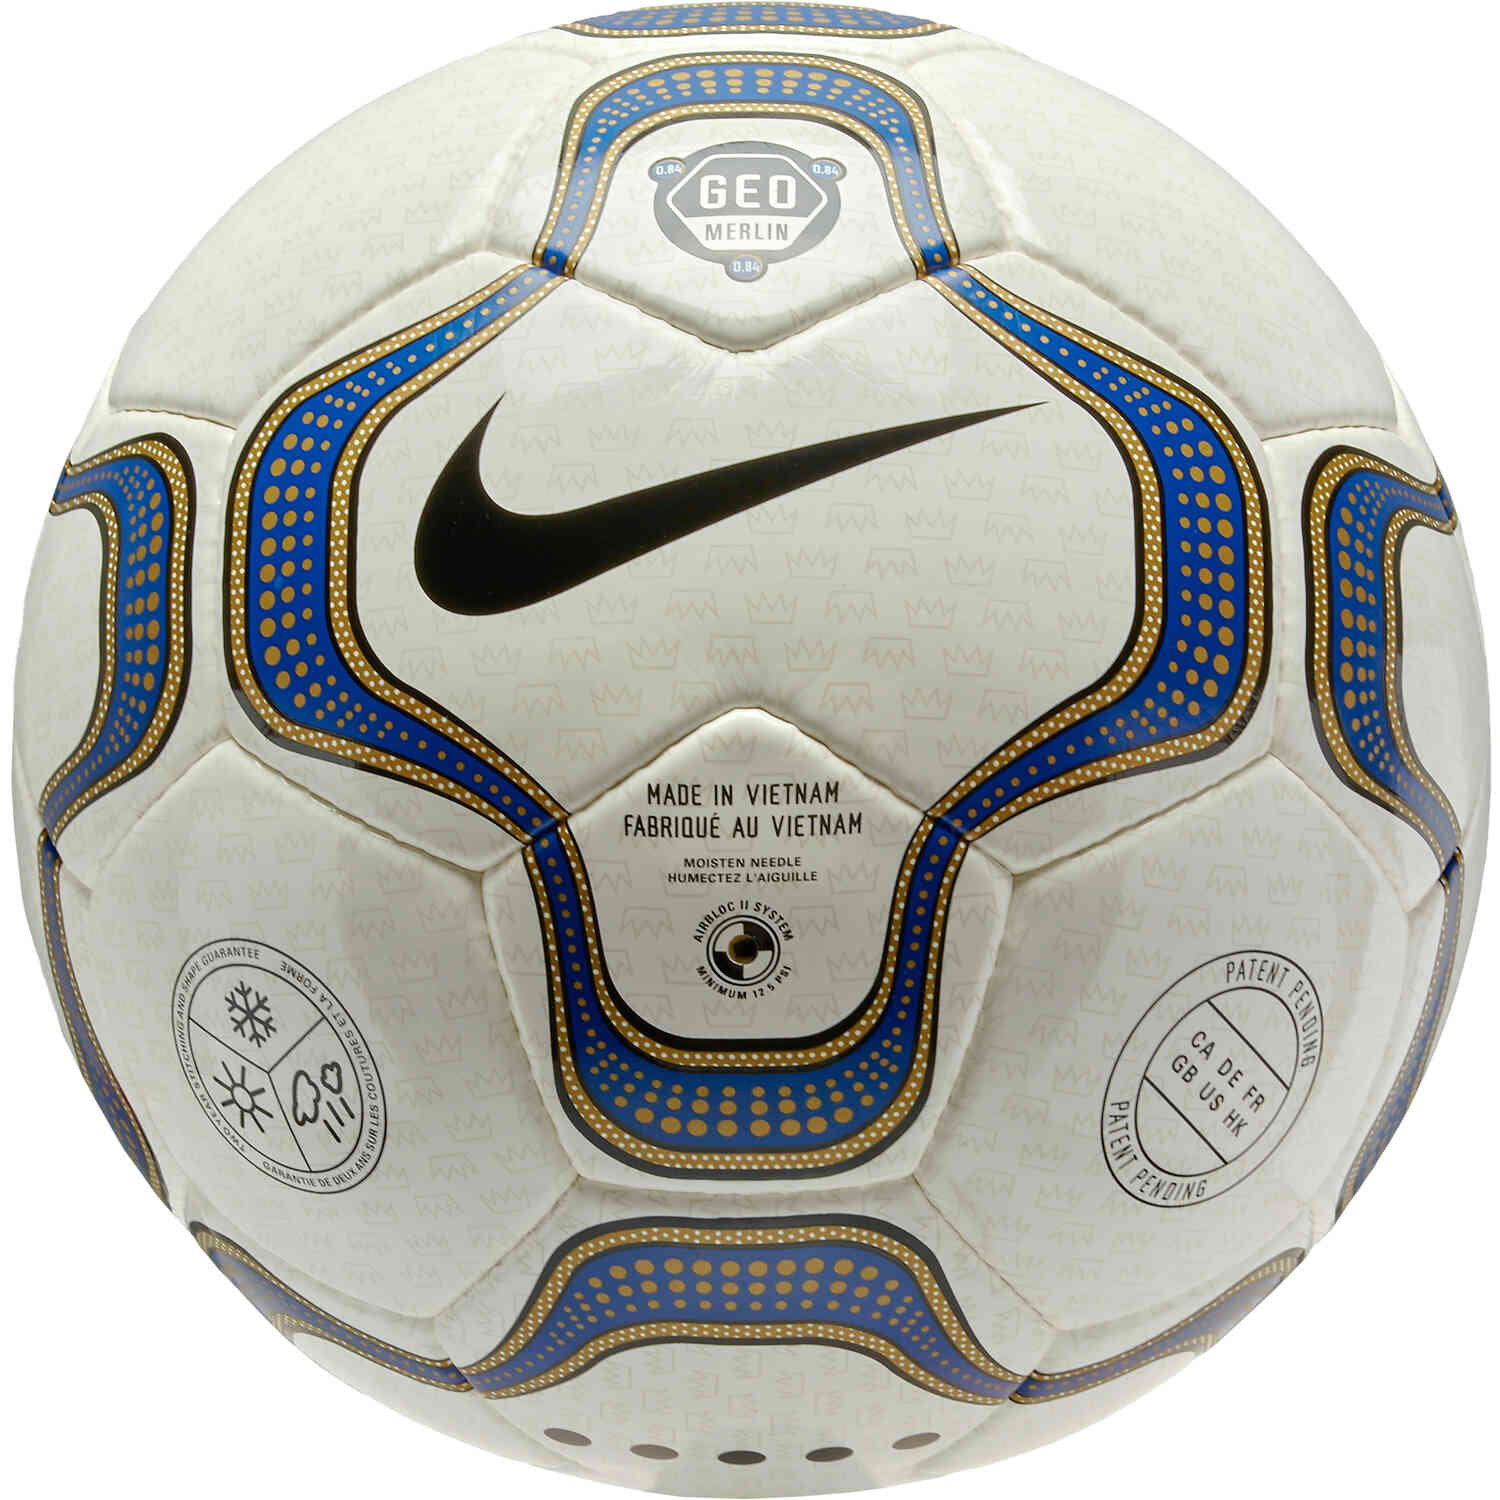 Nike League Geo Merlin Match Soccer Ball - White & Black with Blue - Soccer Master